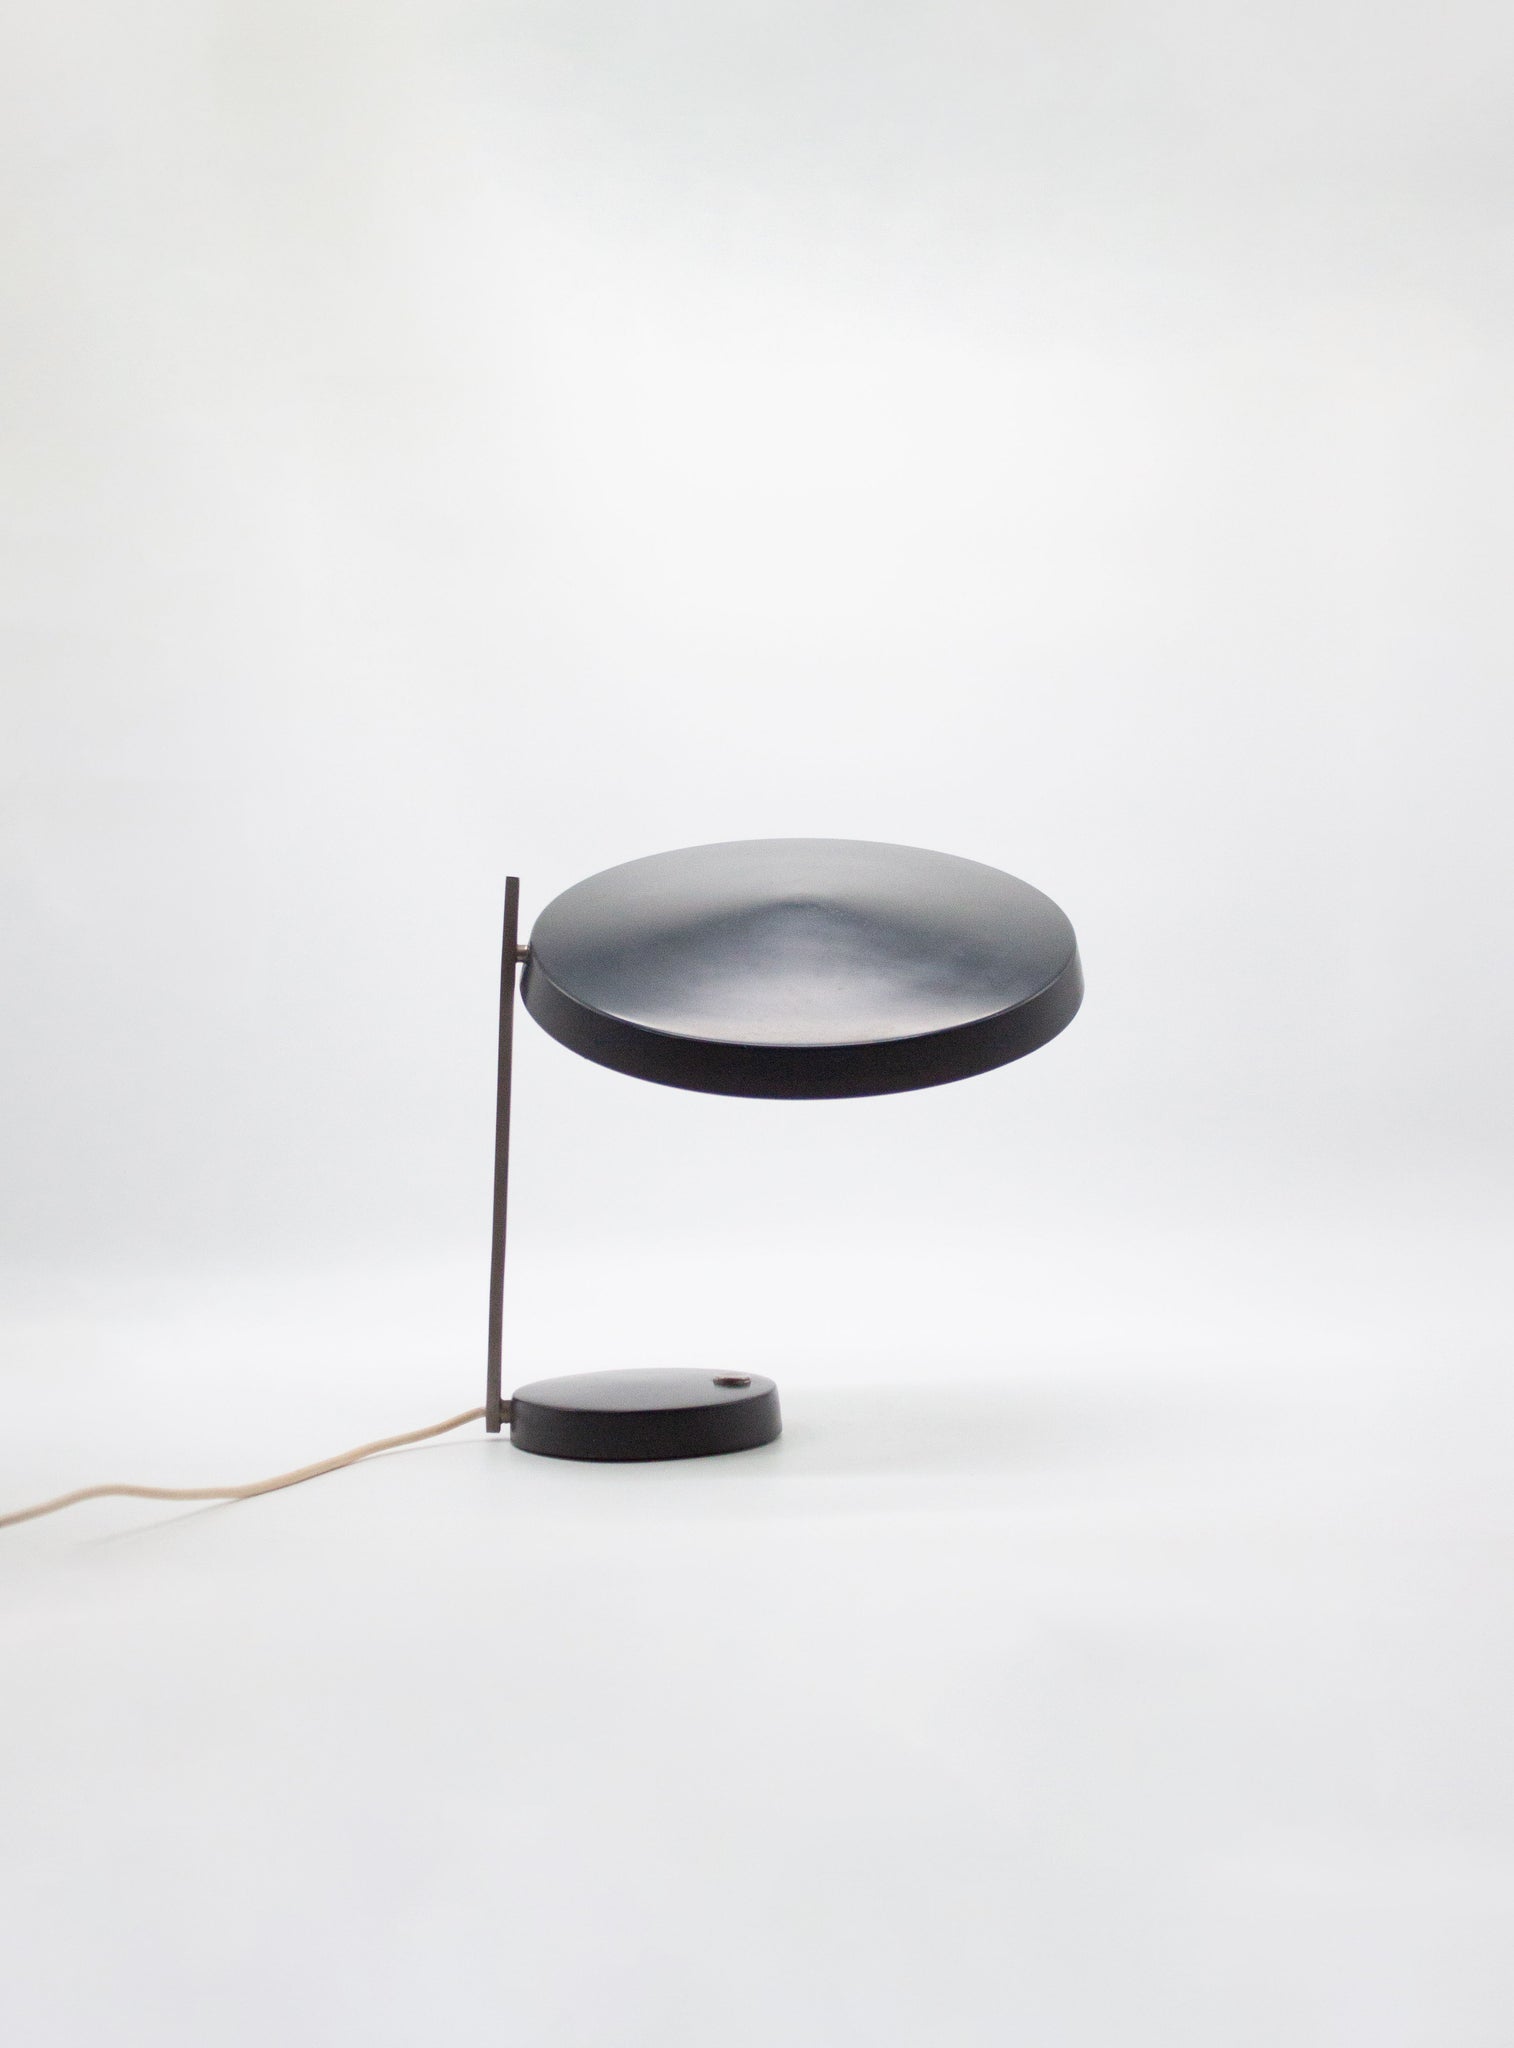 Hillebrand Oslo Table Lamp by Heinz Pfaender (Black)